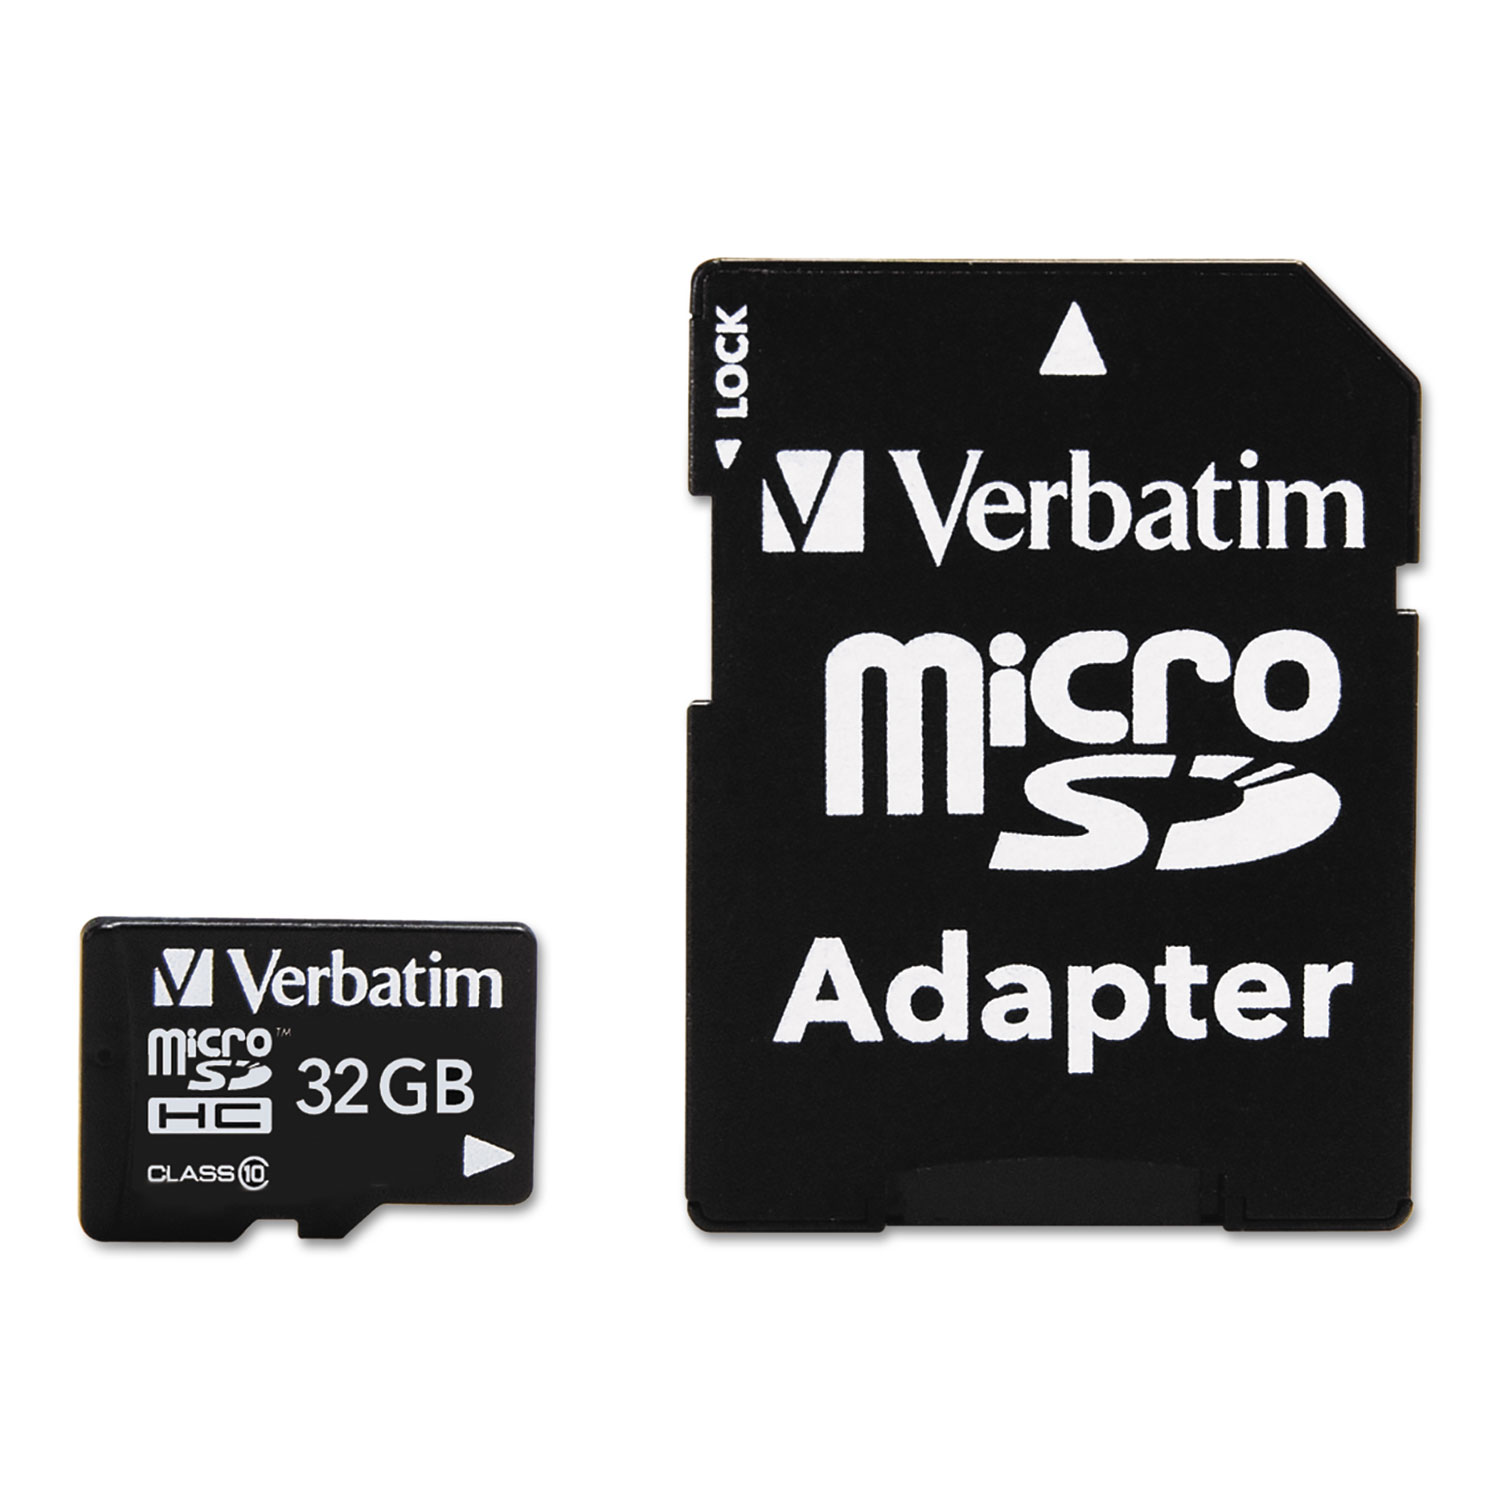 microSDHC Card w/Adapter, Class 10, 32GB